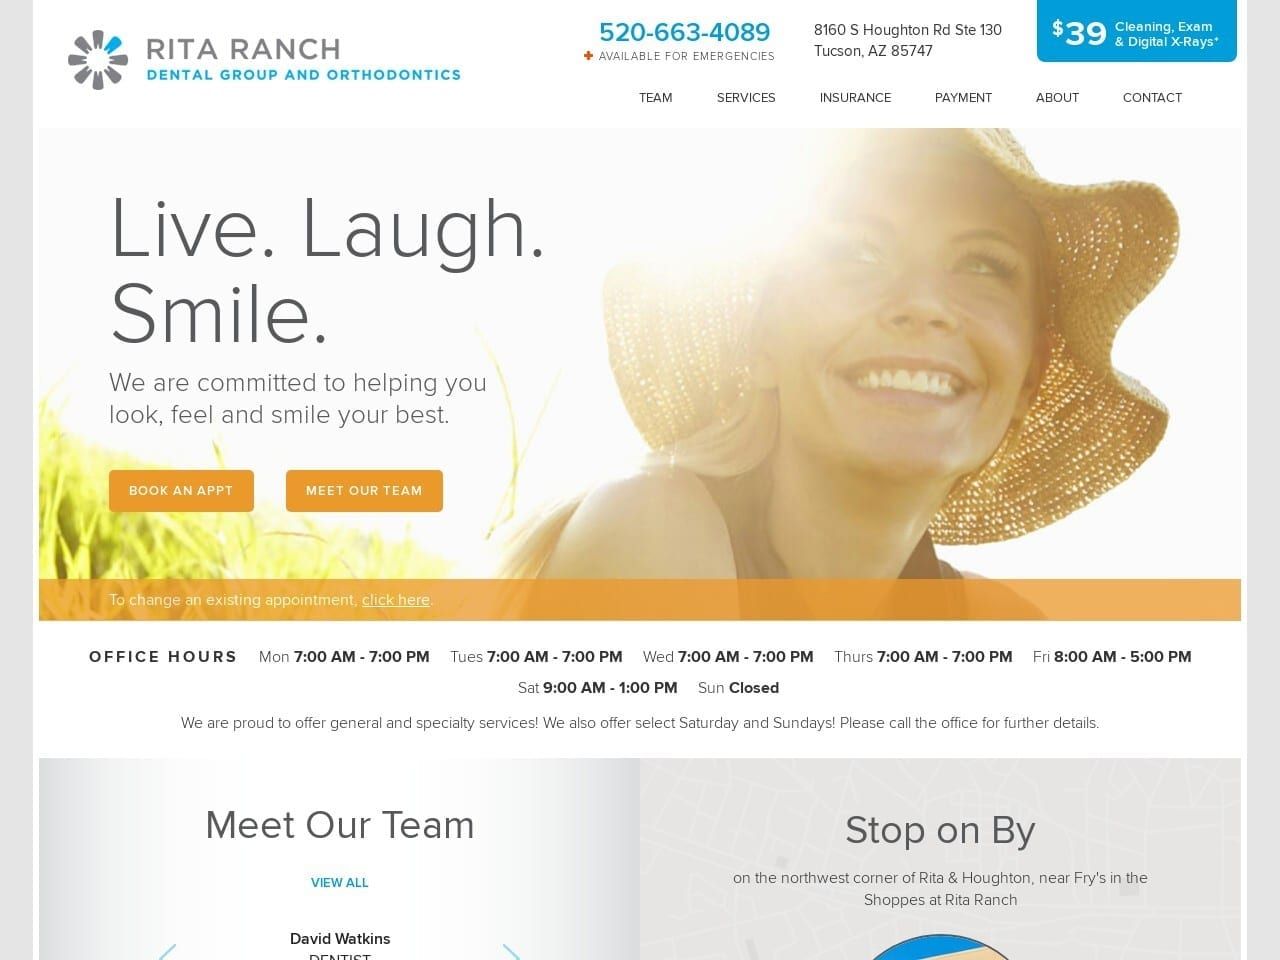 Rita Ranch Dental Group and Orthodontics Website Screenshot from ritaranchdentalgroup.com